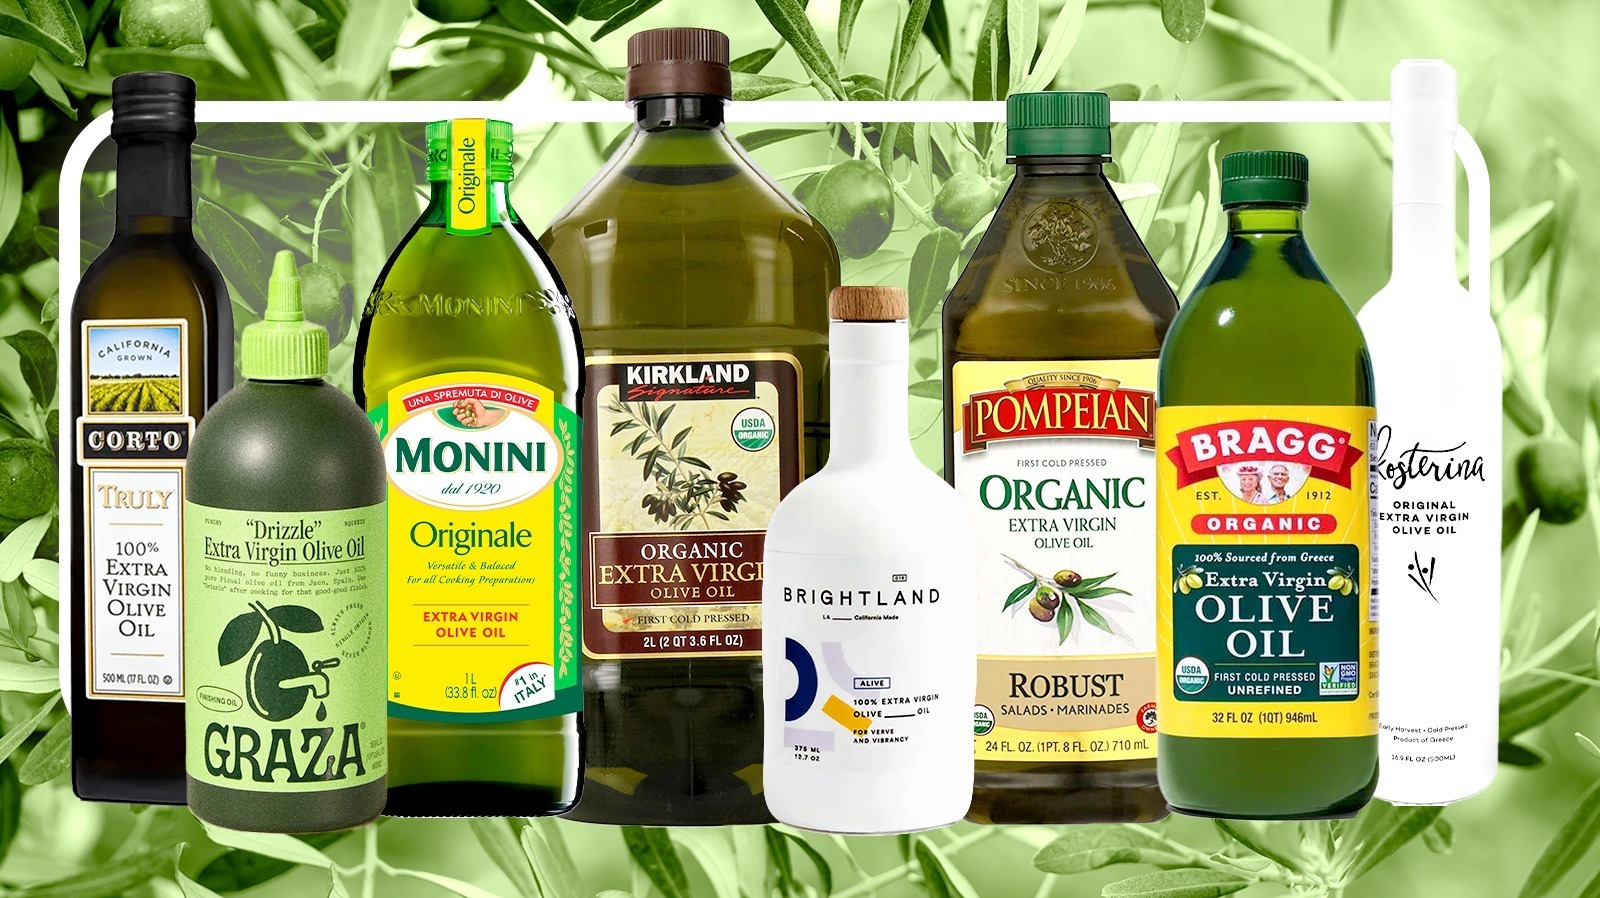 https://www.tastingtable.com/img/gallery/14-best-finishing-olive-oil-brands-ranked/l-intro-1680043512.jpg